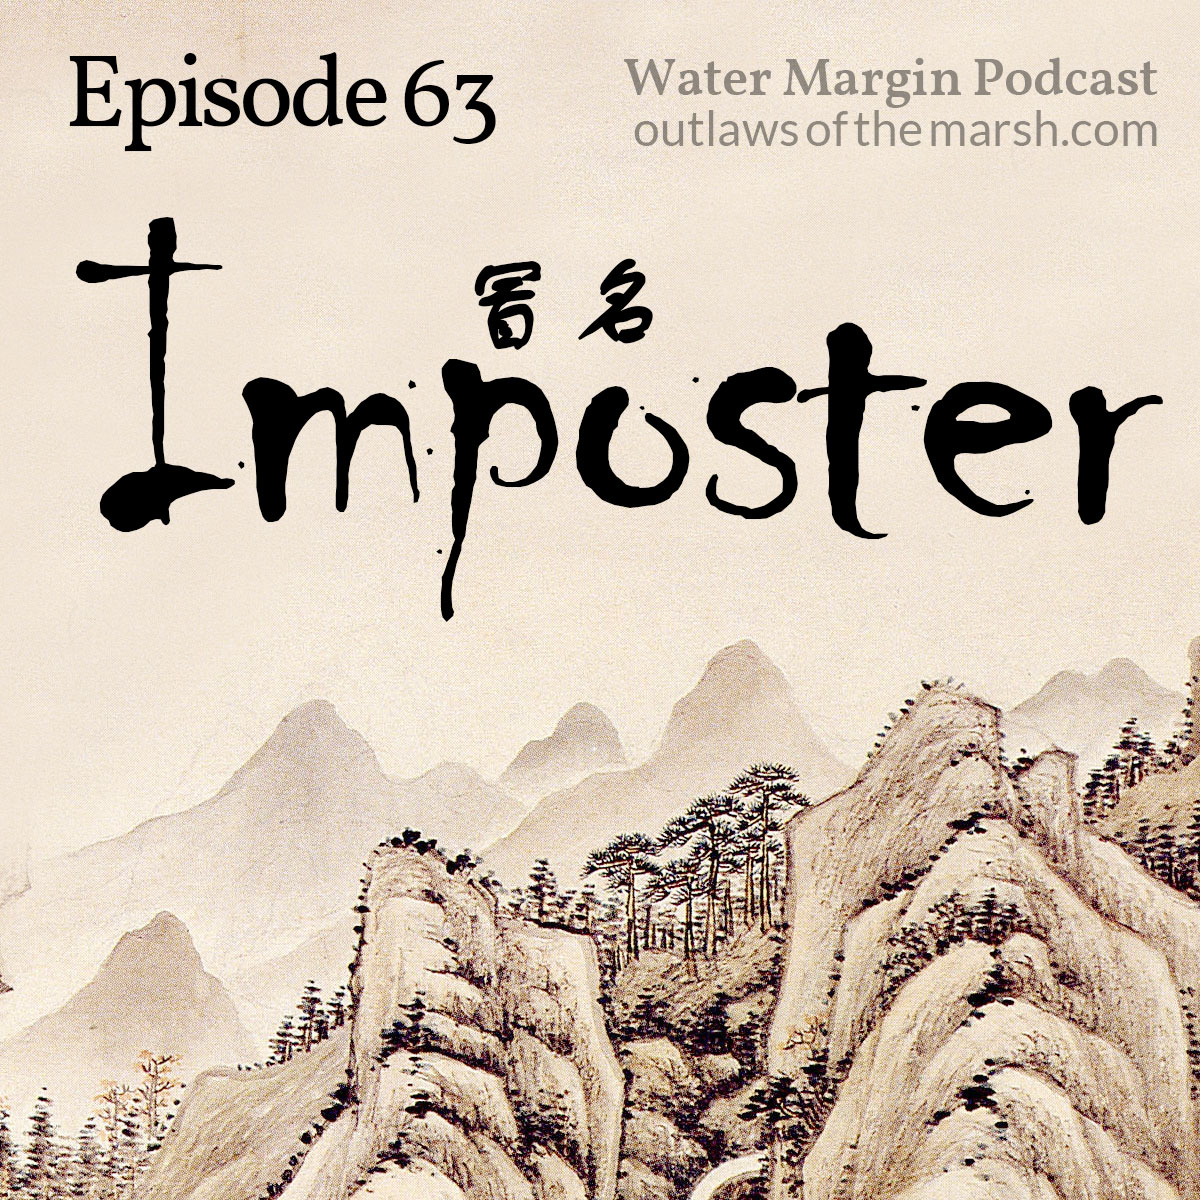 Water Margin Podcast: Episode 063